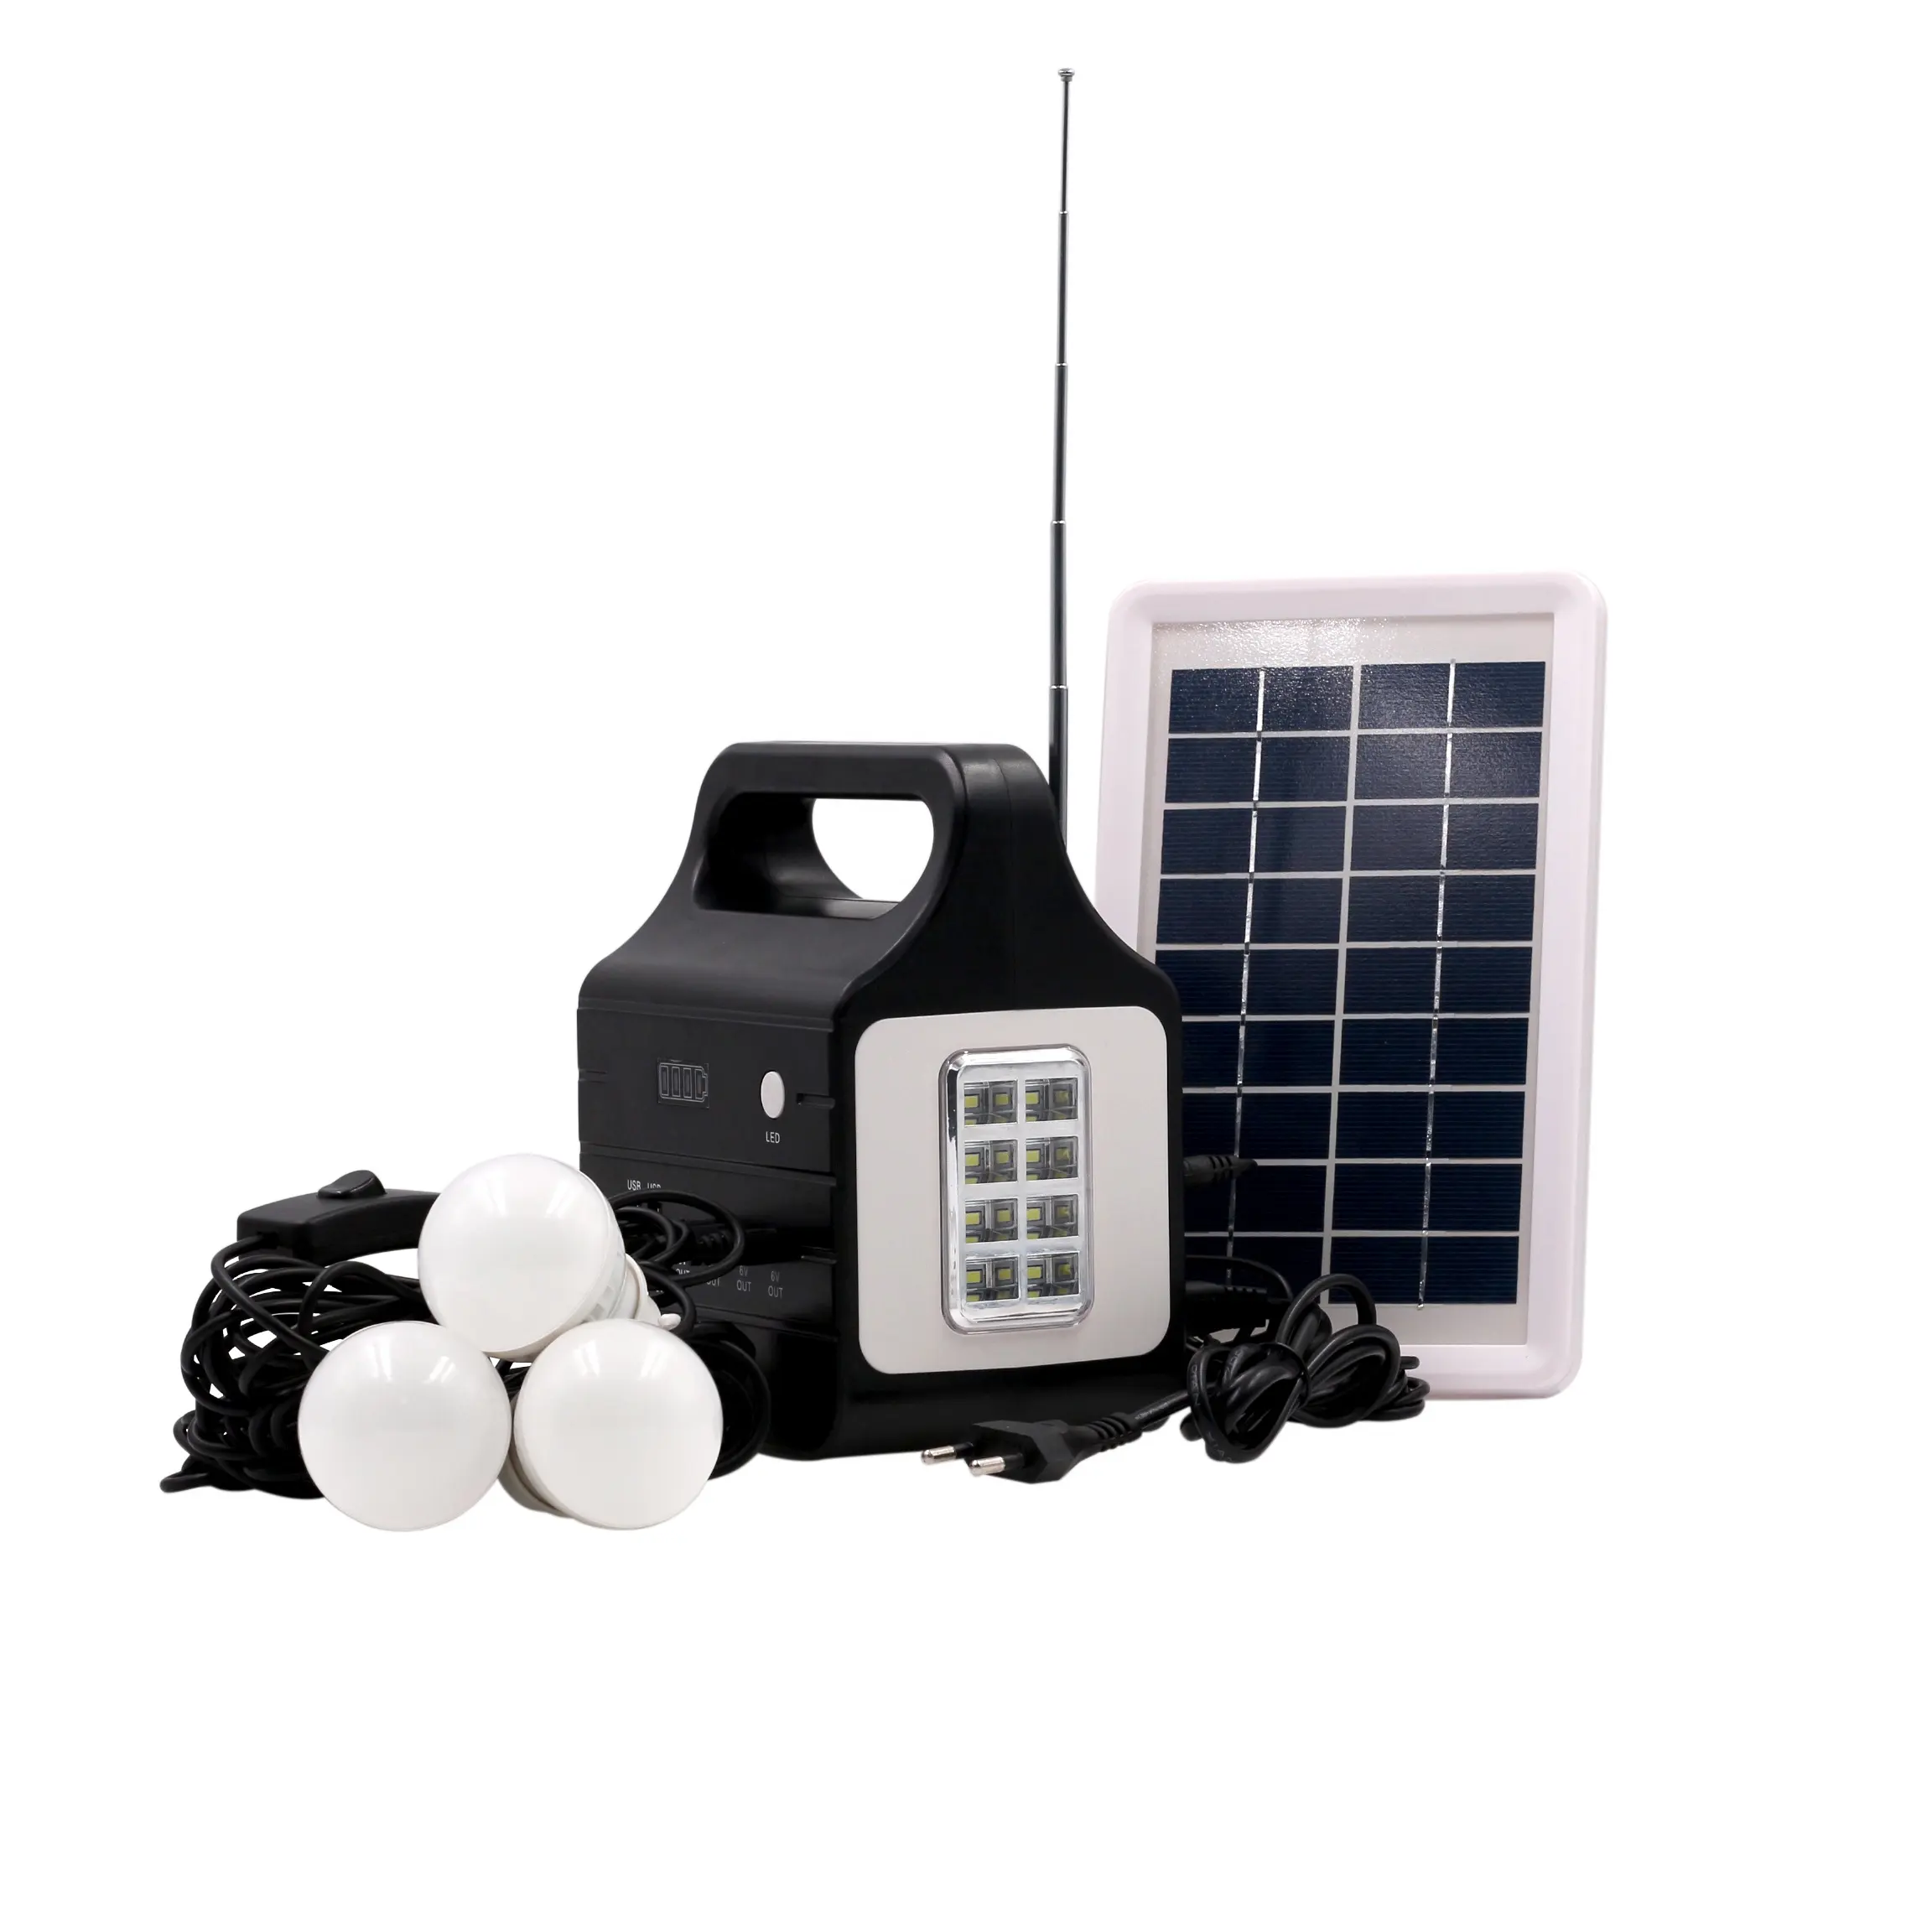 Großhandel beliebt neu Mit 9 V3W Solarmodule 6 V3A USB/FM/Lautsprecher funktion/Mobil/Licht Home Solarmodule System Preis